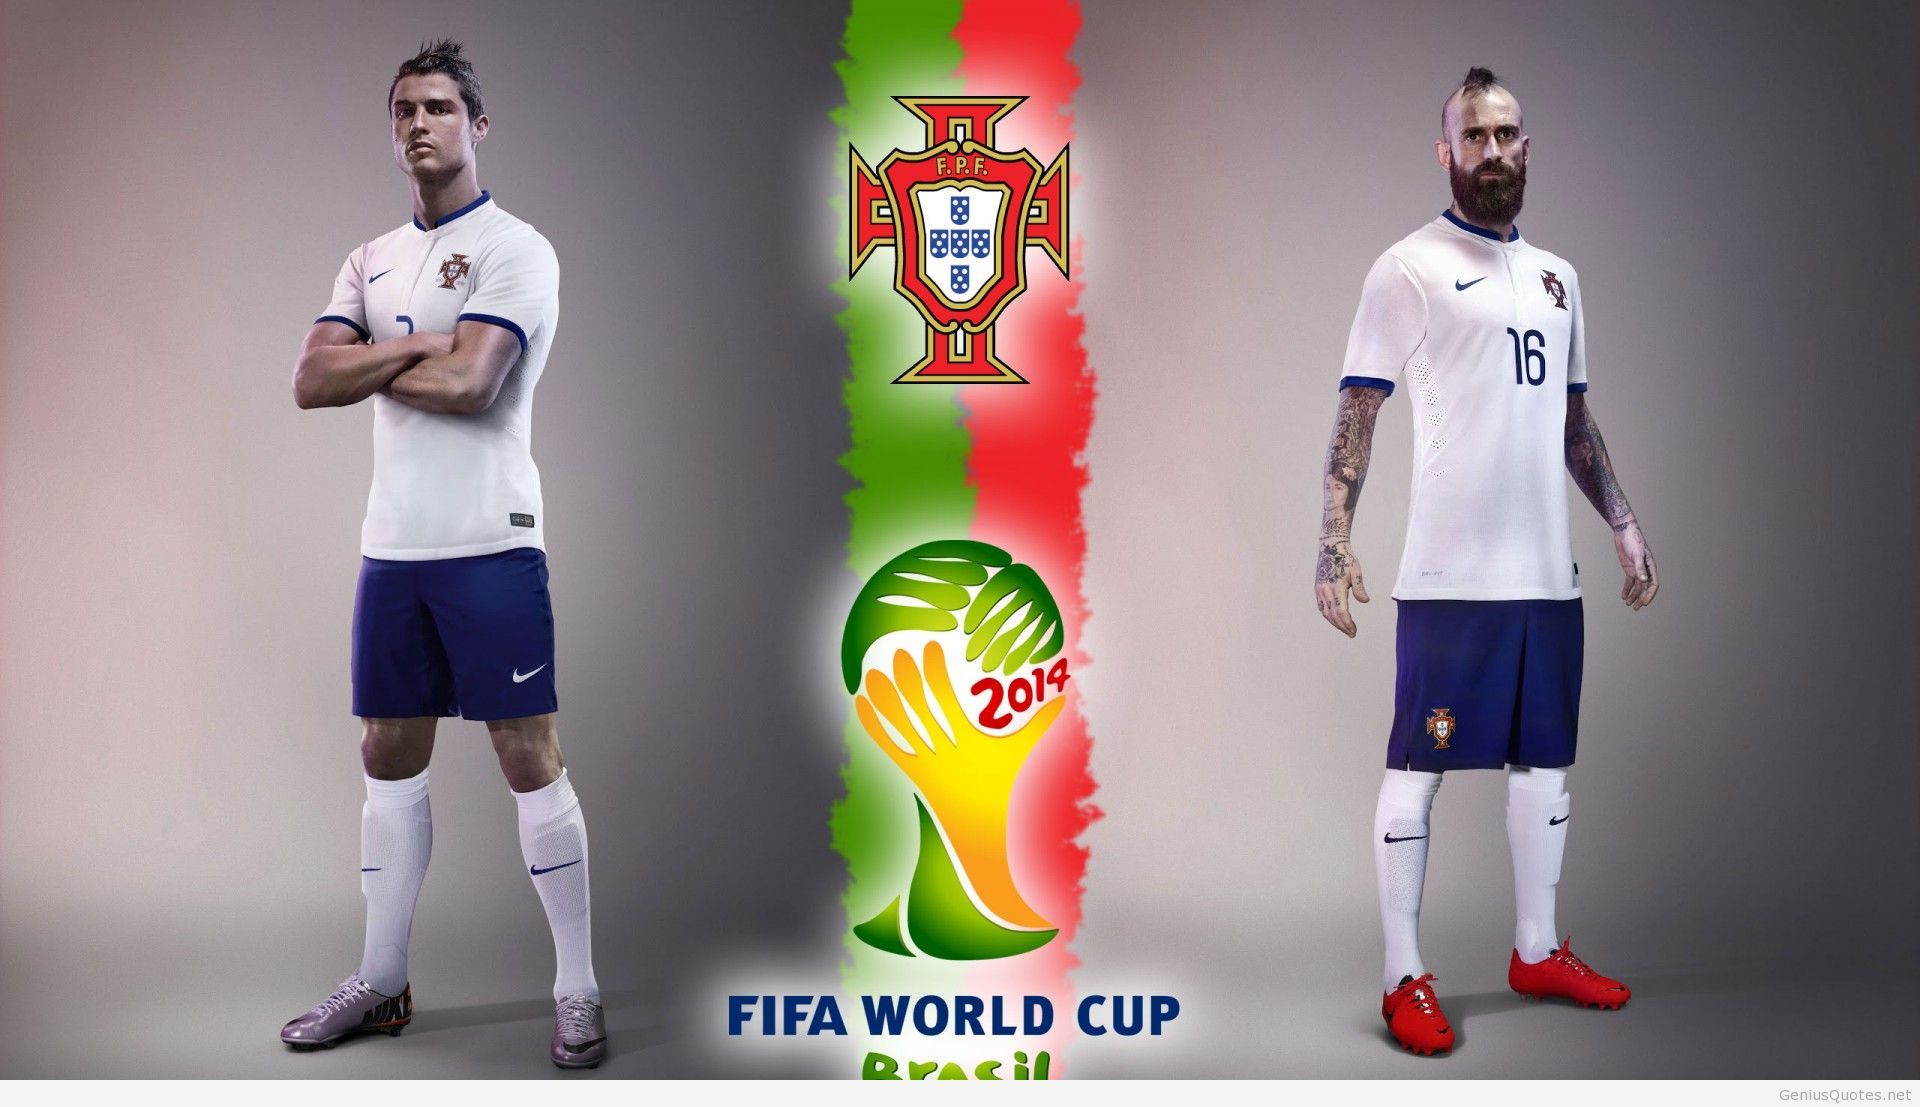 Cristiano Ronaldo Fifa World Cup 2014 Portugal Wallpapers Hd